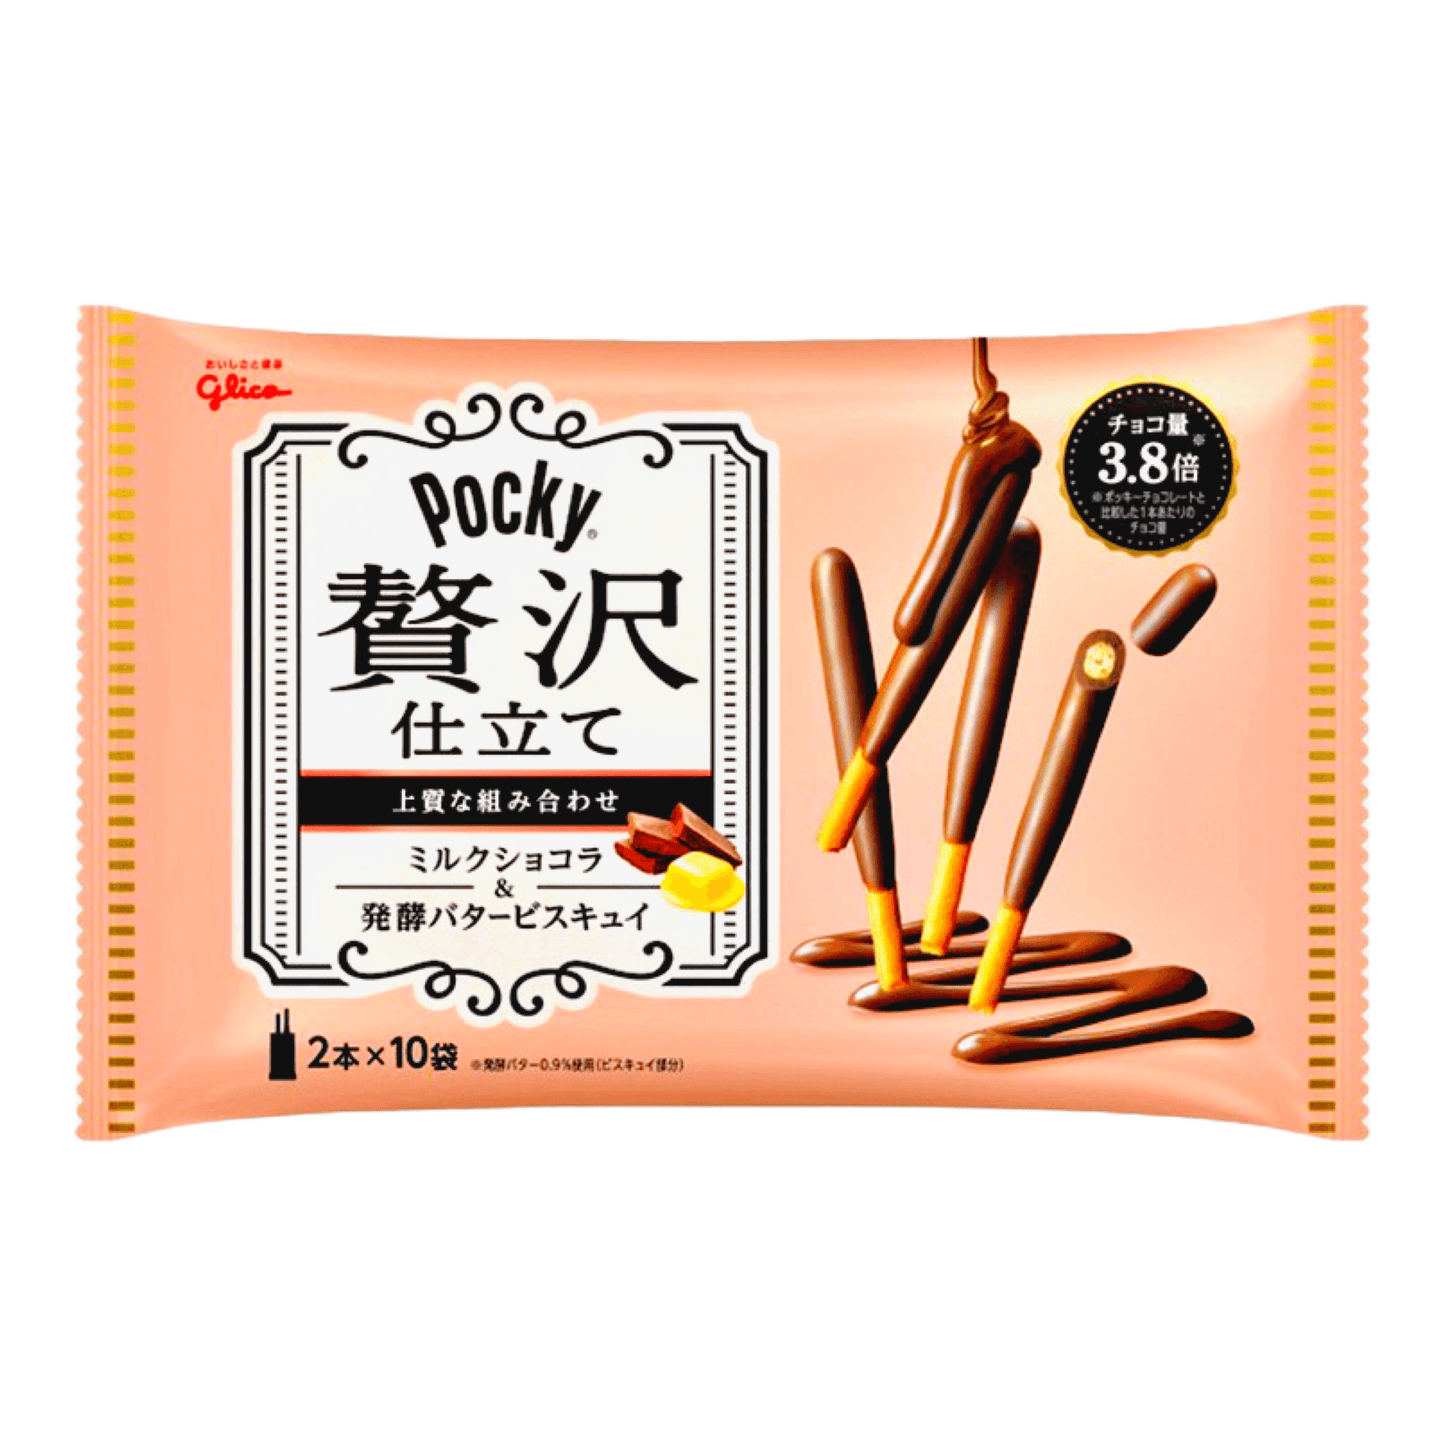 Glico Pocky Zeitaku Milk Chocolate Biscuit Sticks 120g - The Snacks Box - Asian Snacks Store - The Snacks Box - Korean Snack - Japanese Snack